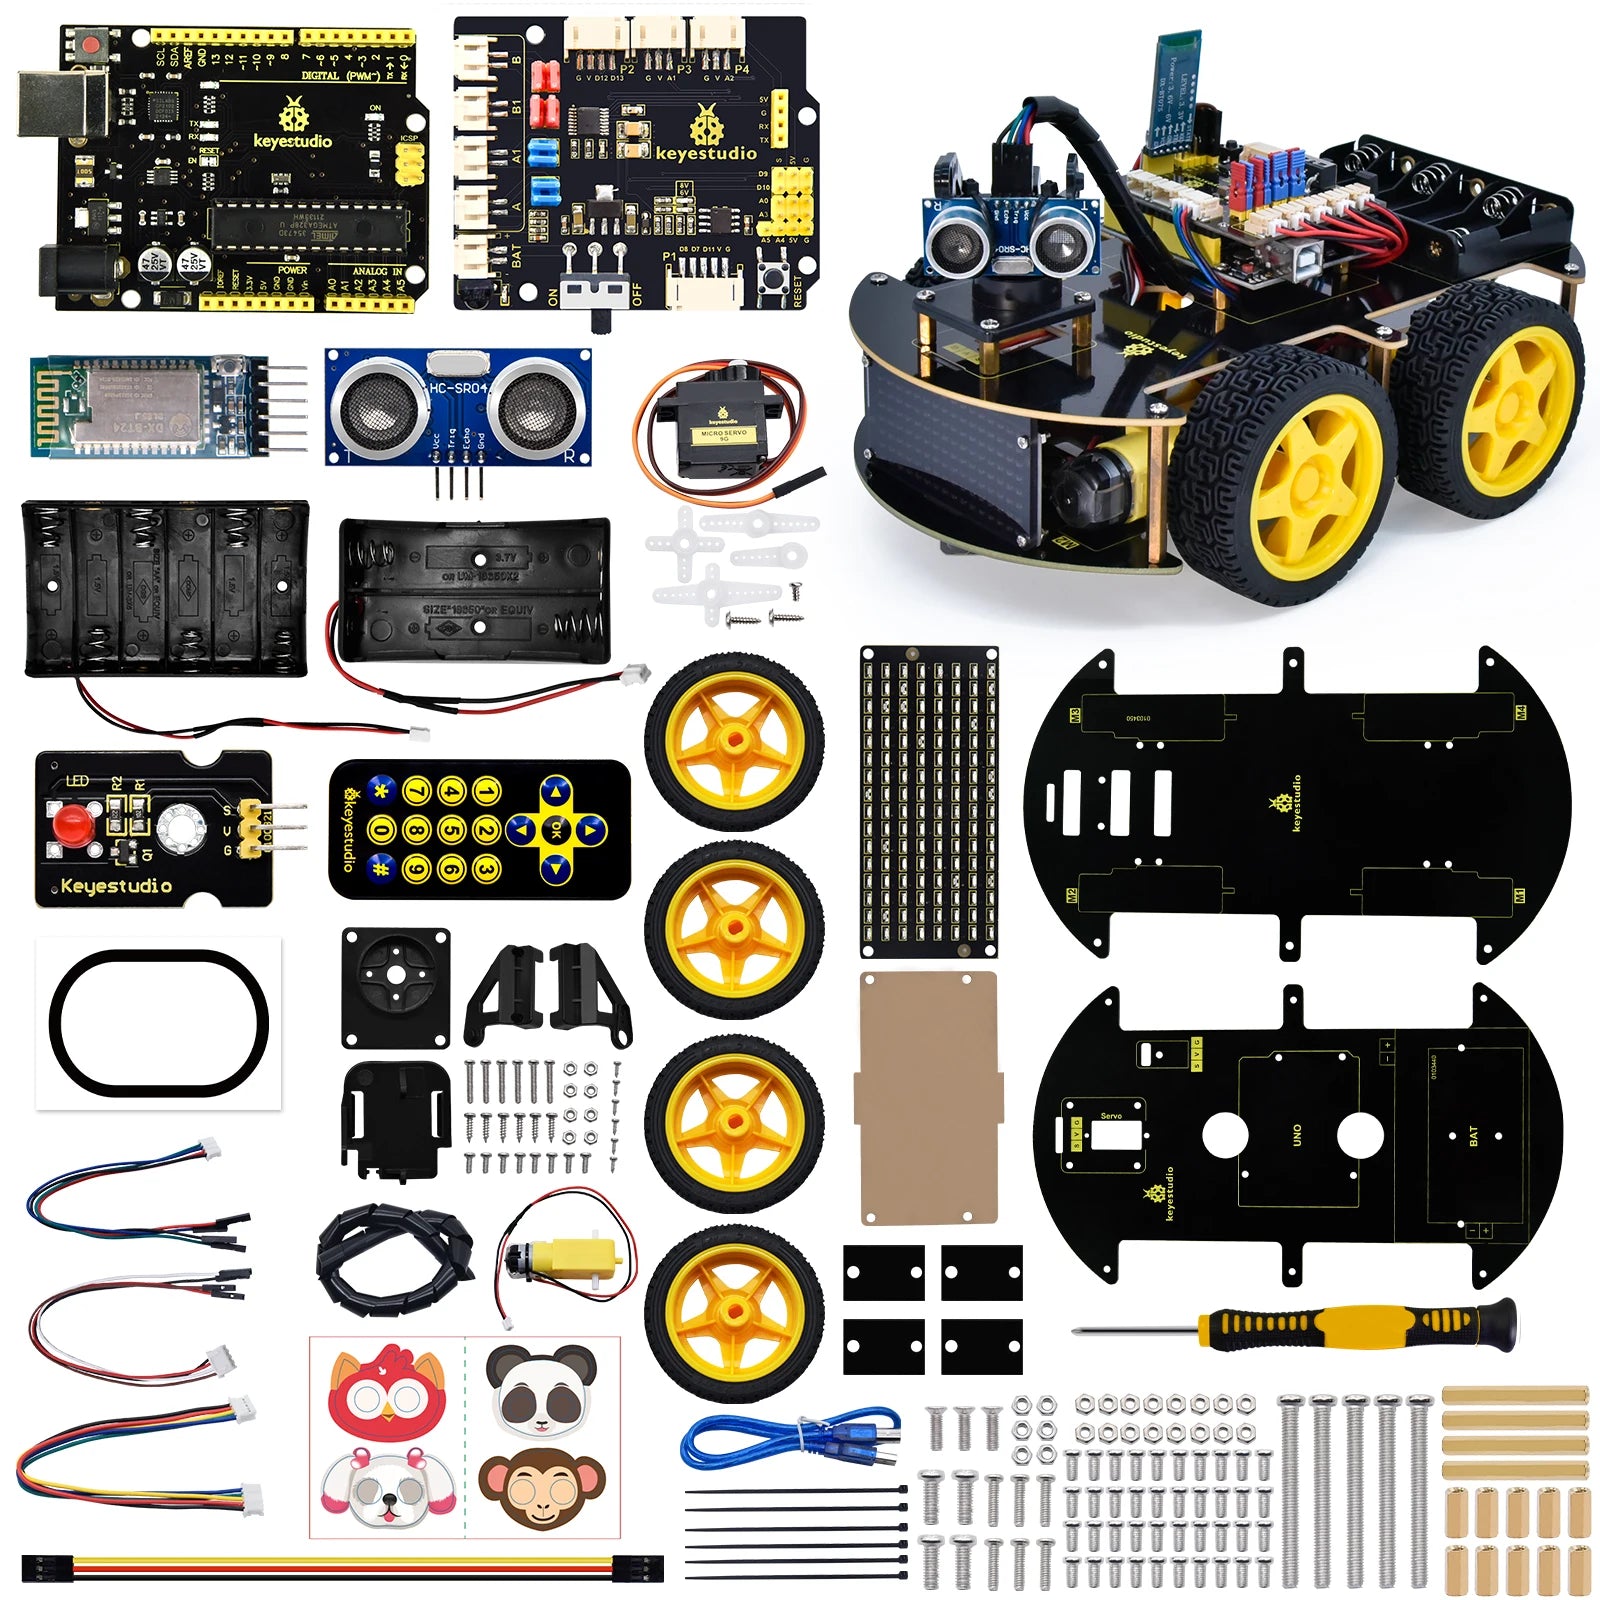 4WD Multi BT Robot Car Kit V2.0 W/LED Display for Arduino Robot Kit DIY Electronic Kit/Programming Car Kit Kids Toys